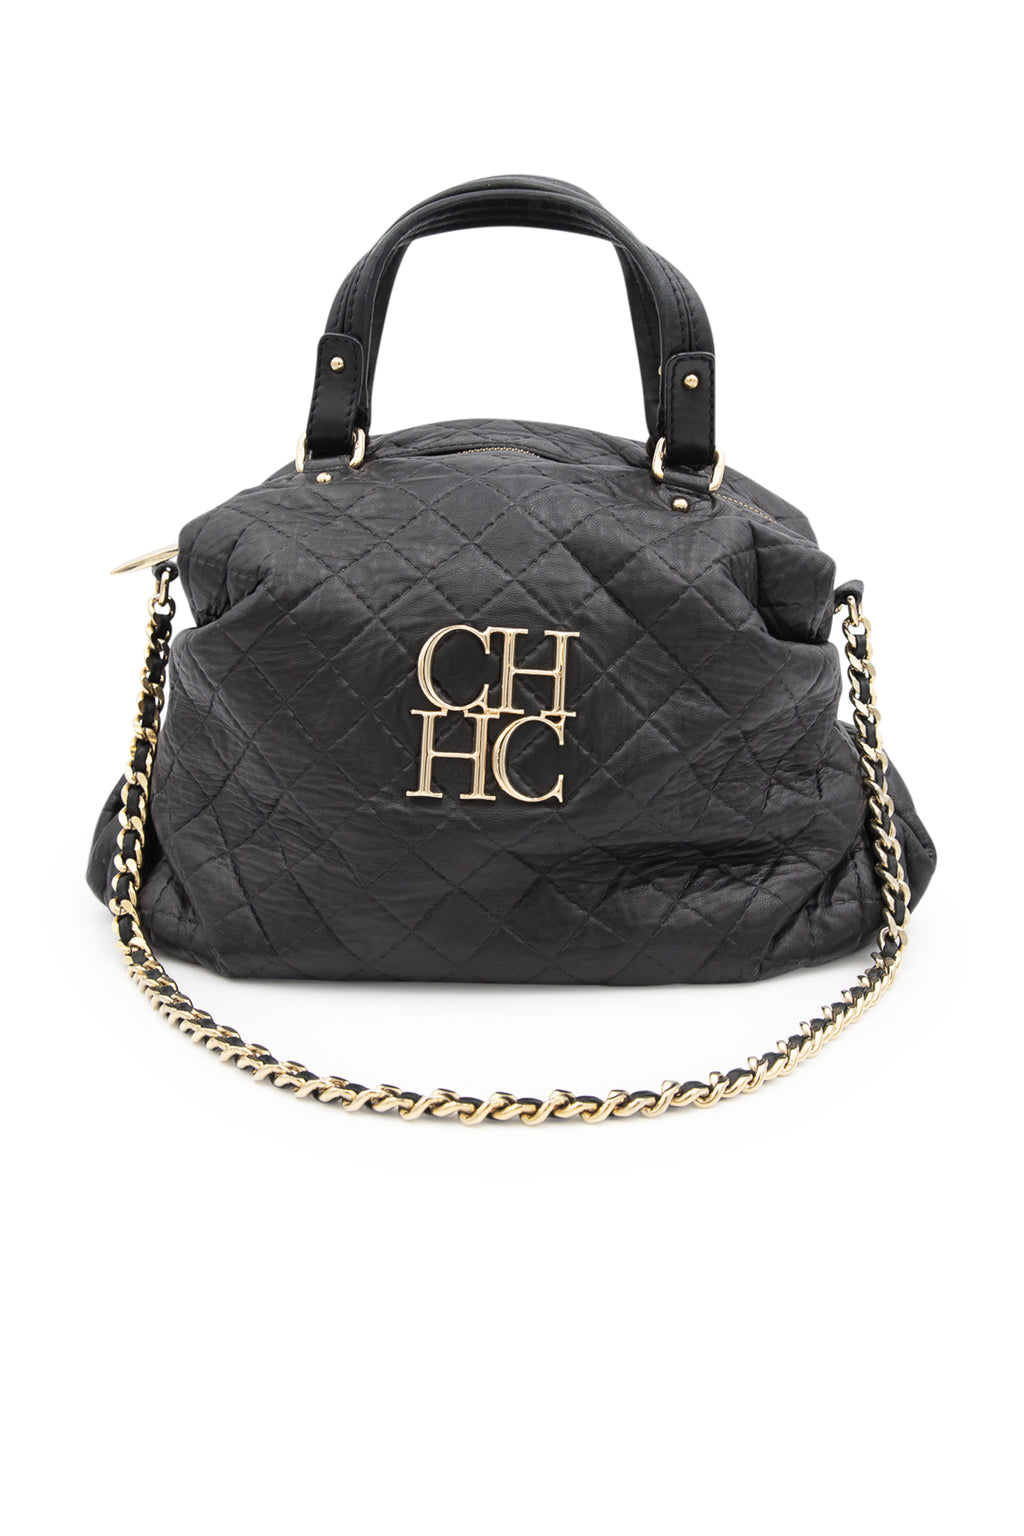 CAROLINA HERRERA 'JEWEL' Black QUILTED LEATHER Chain Clutch Bag CH  HandBag NWT